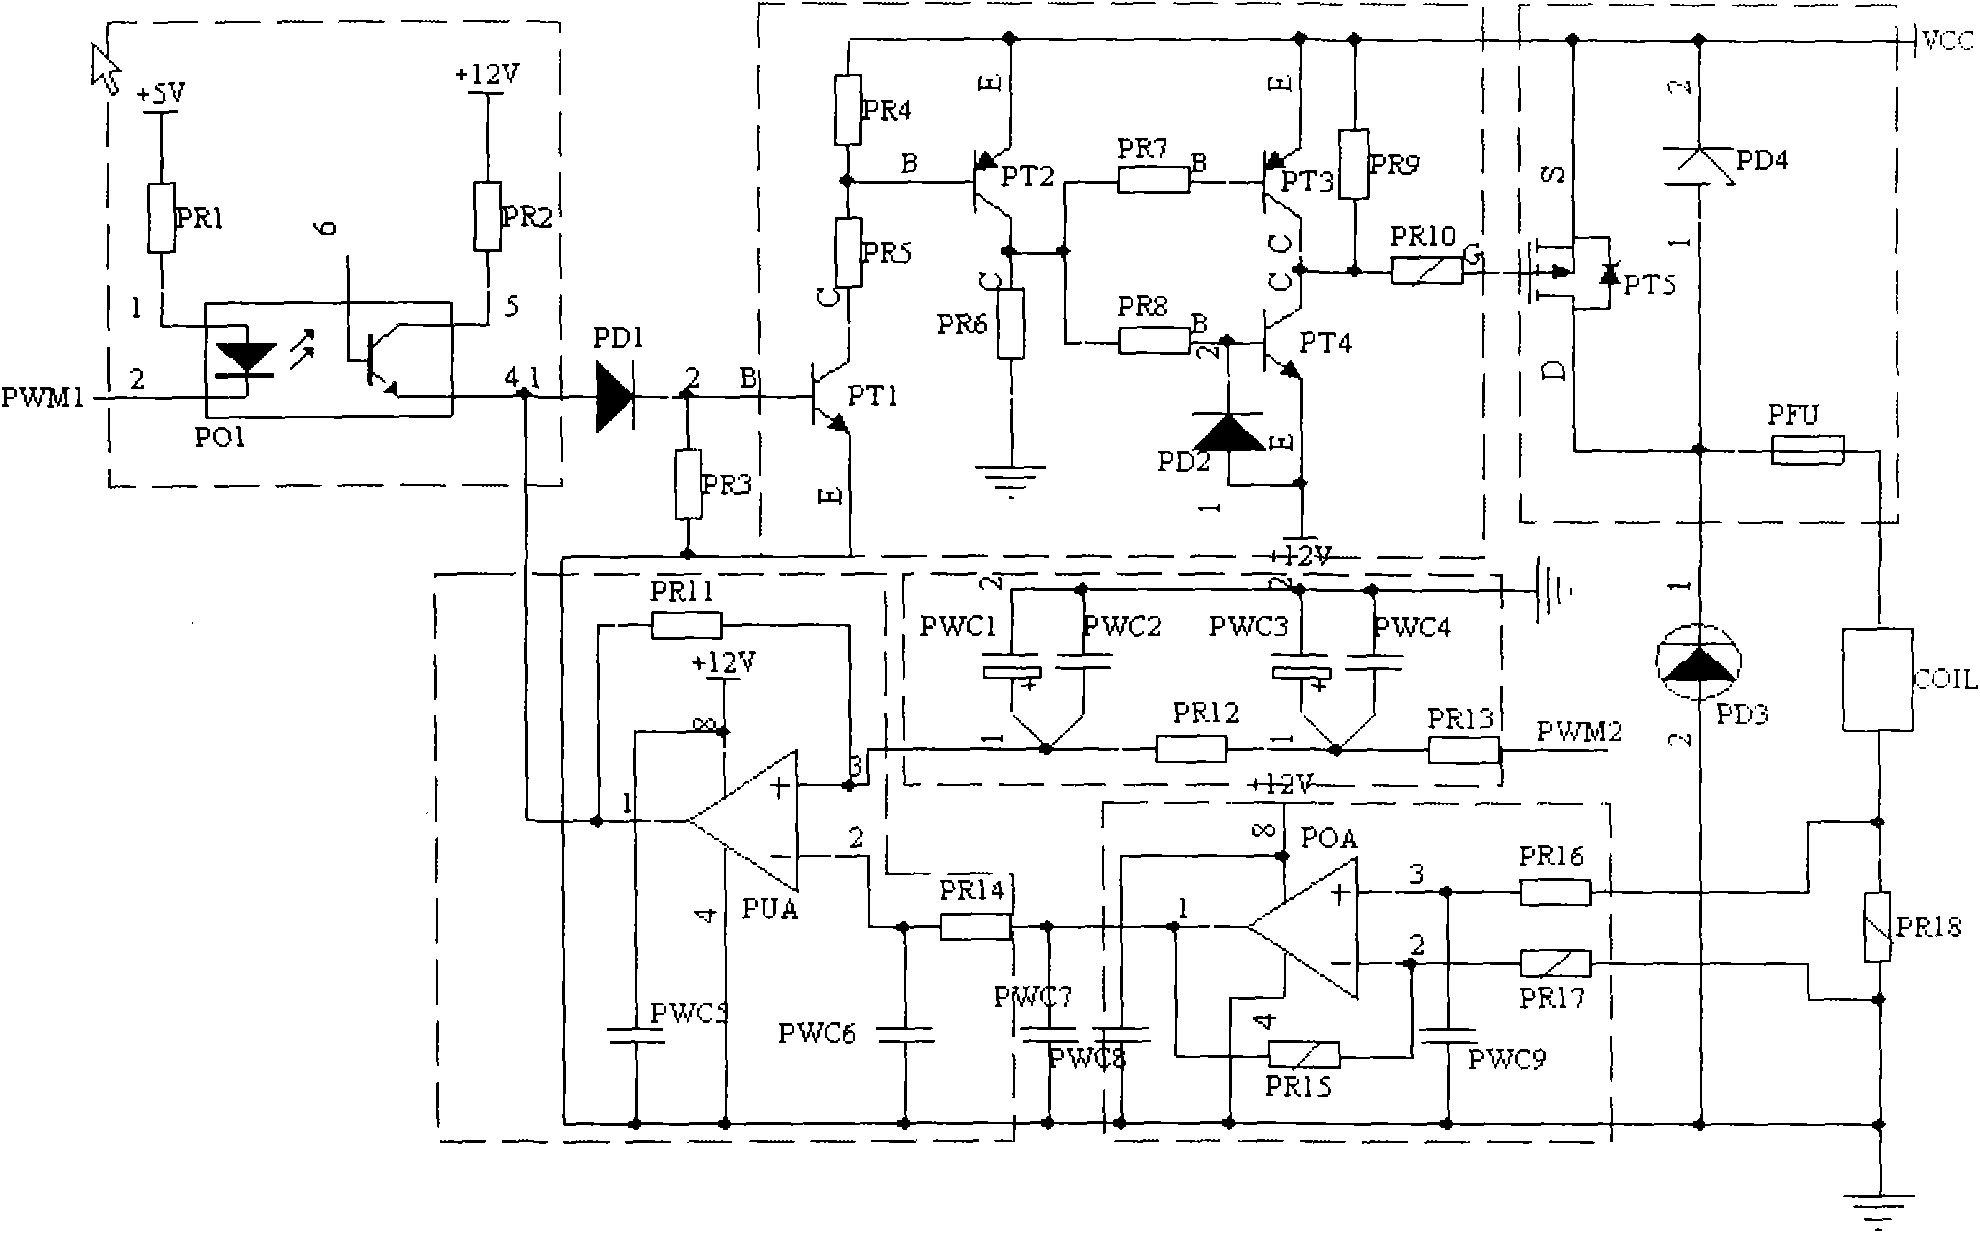 Control method of proportional valve output compensation circuit